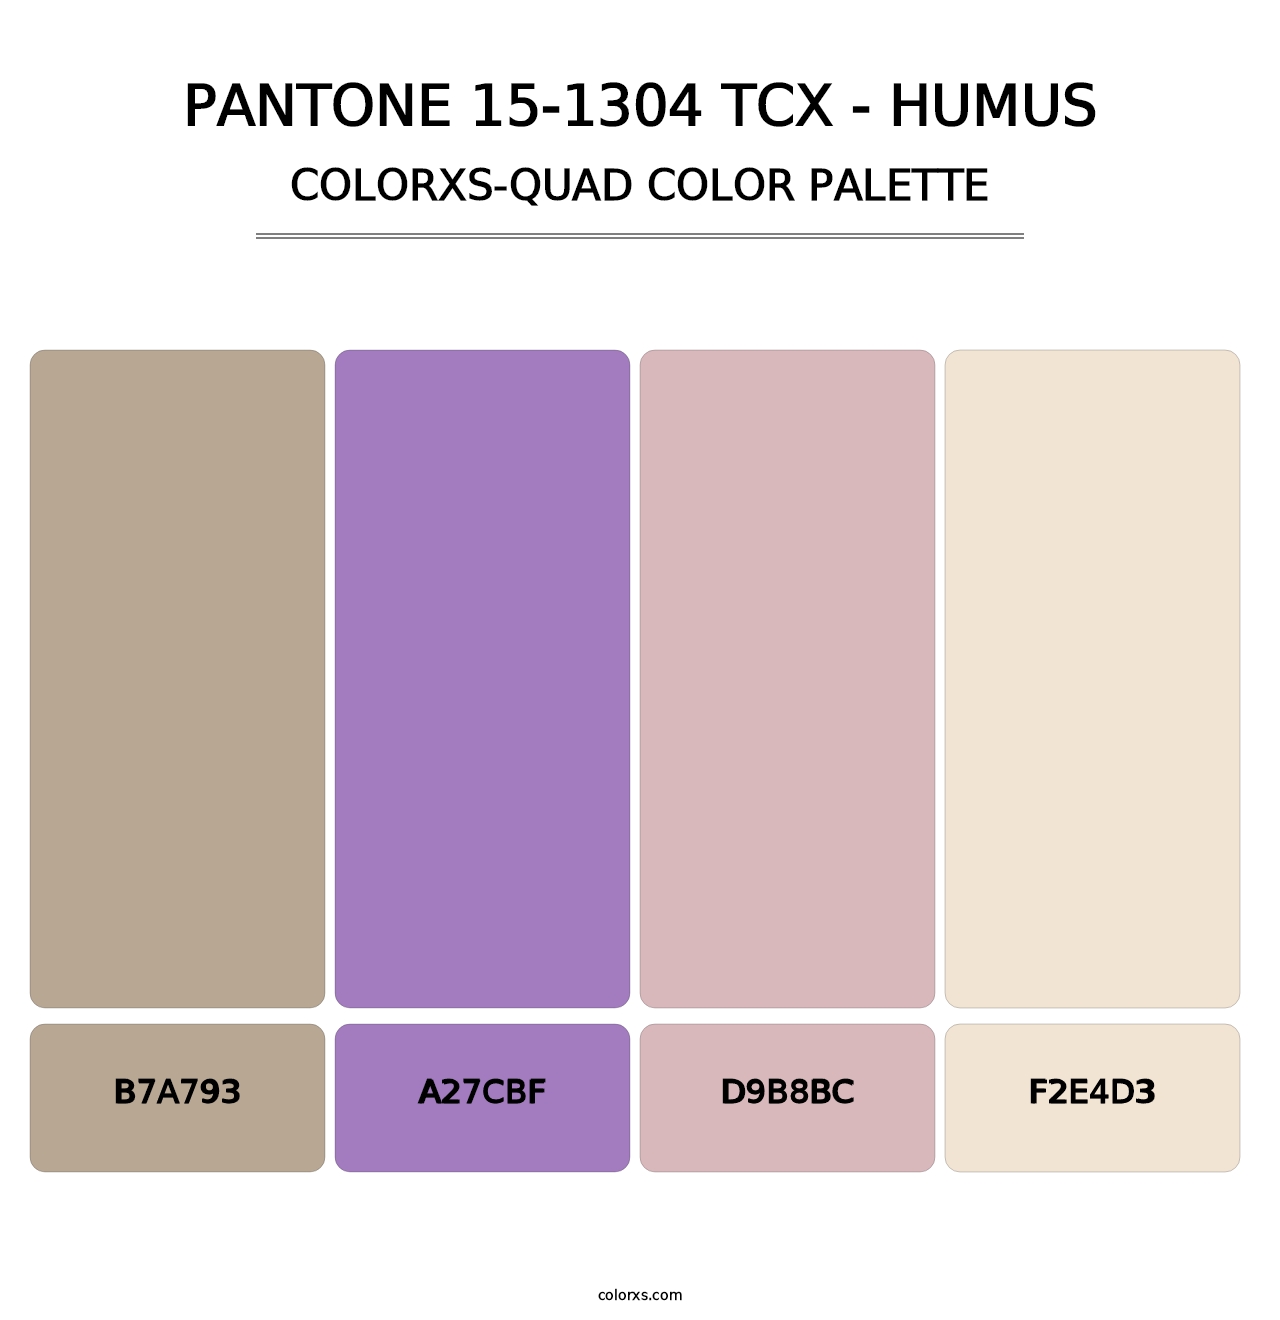 PANTONE 15-1304 TCX - Humus - Colorxs Quad Palette